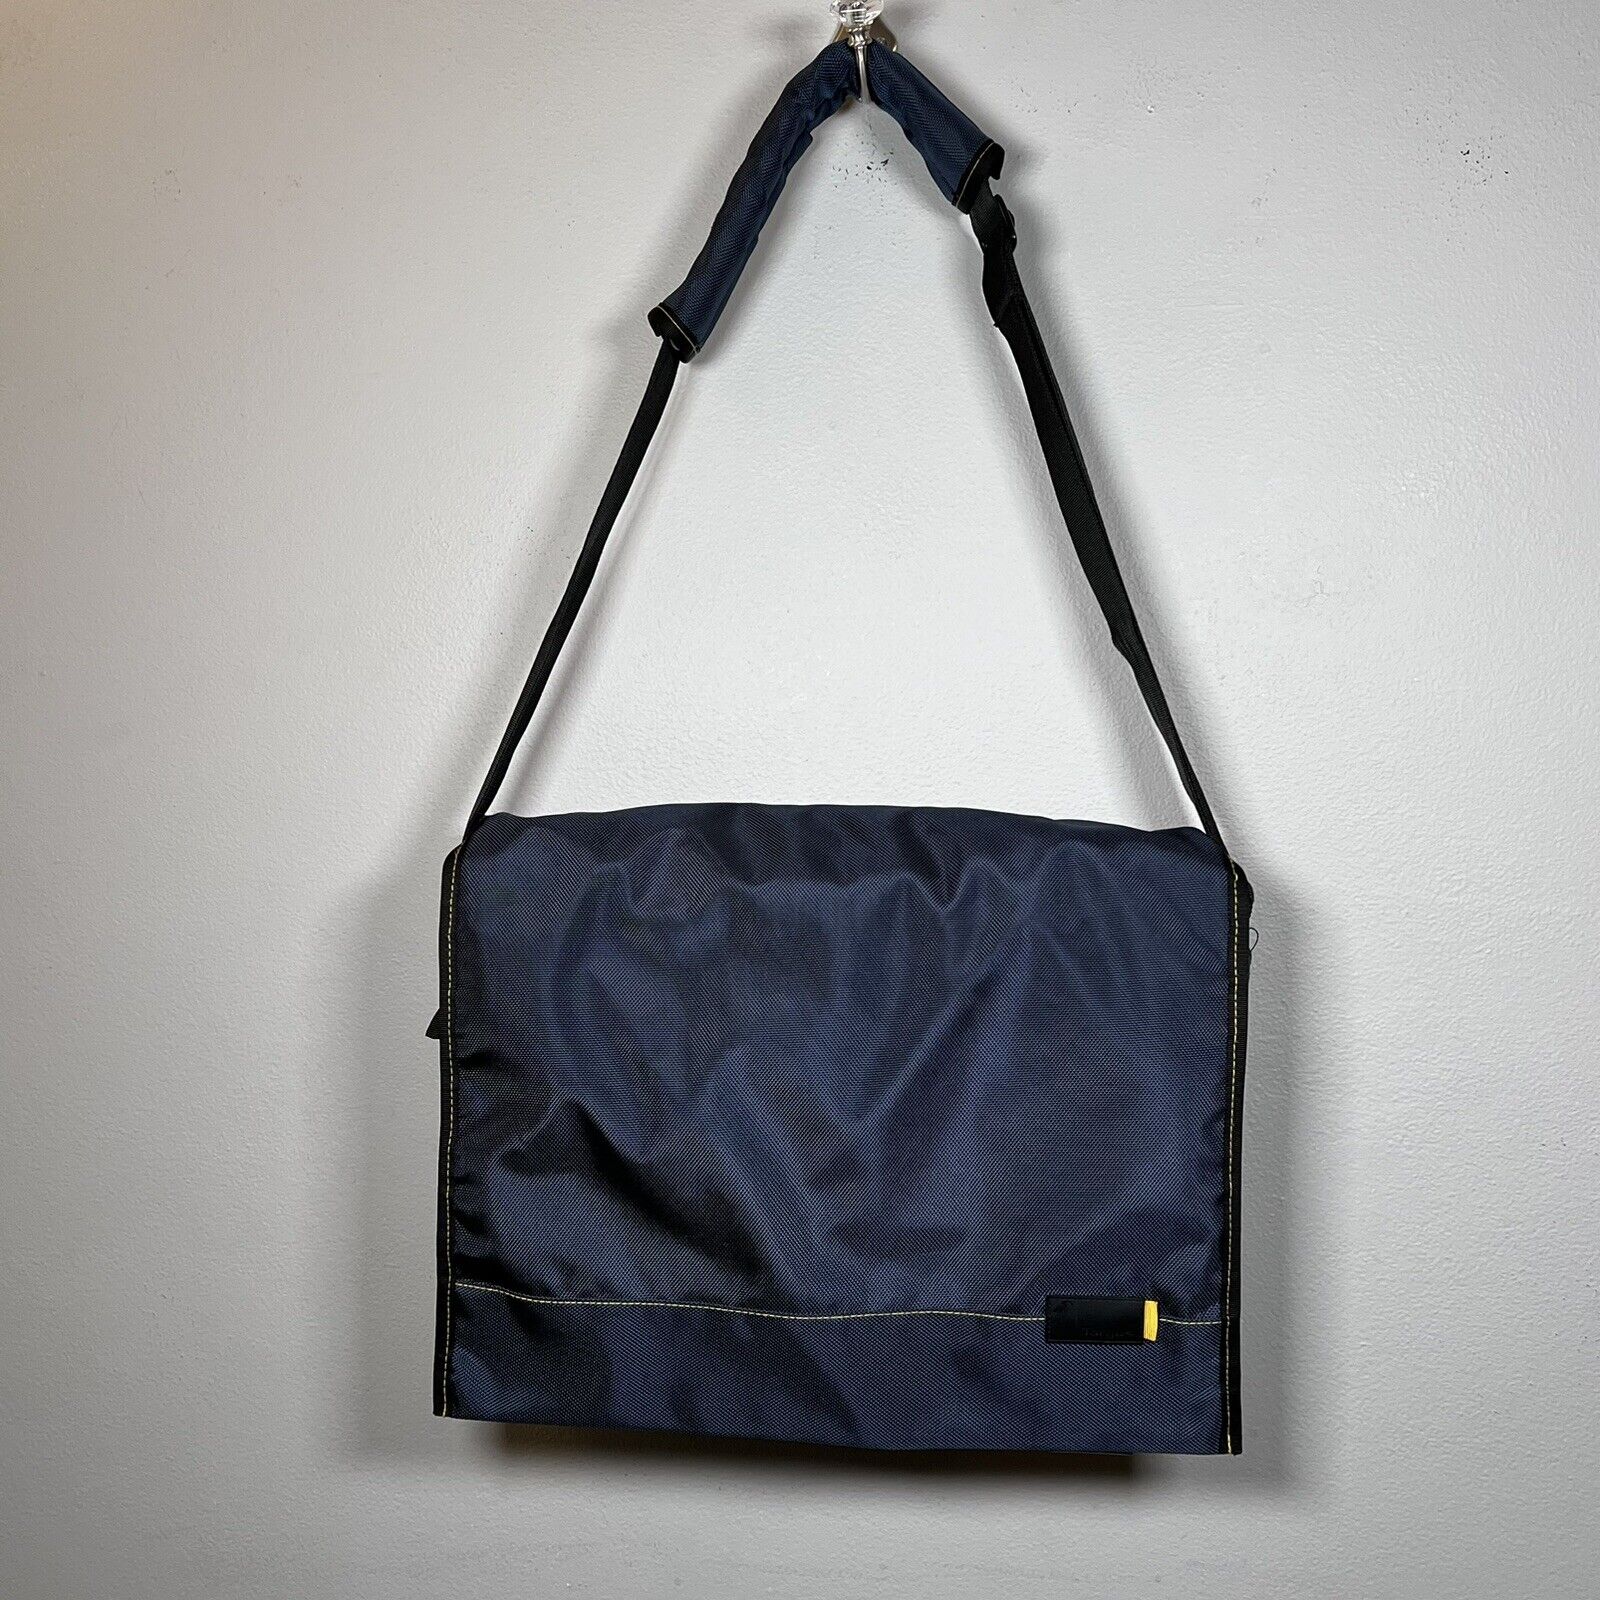 Targus Blue &Yellow Laptop Messenger Bag Up to 17 inch Laptops Adjustable Strap